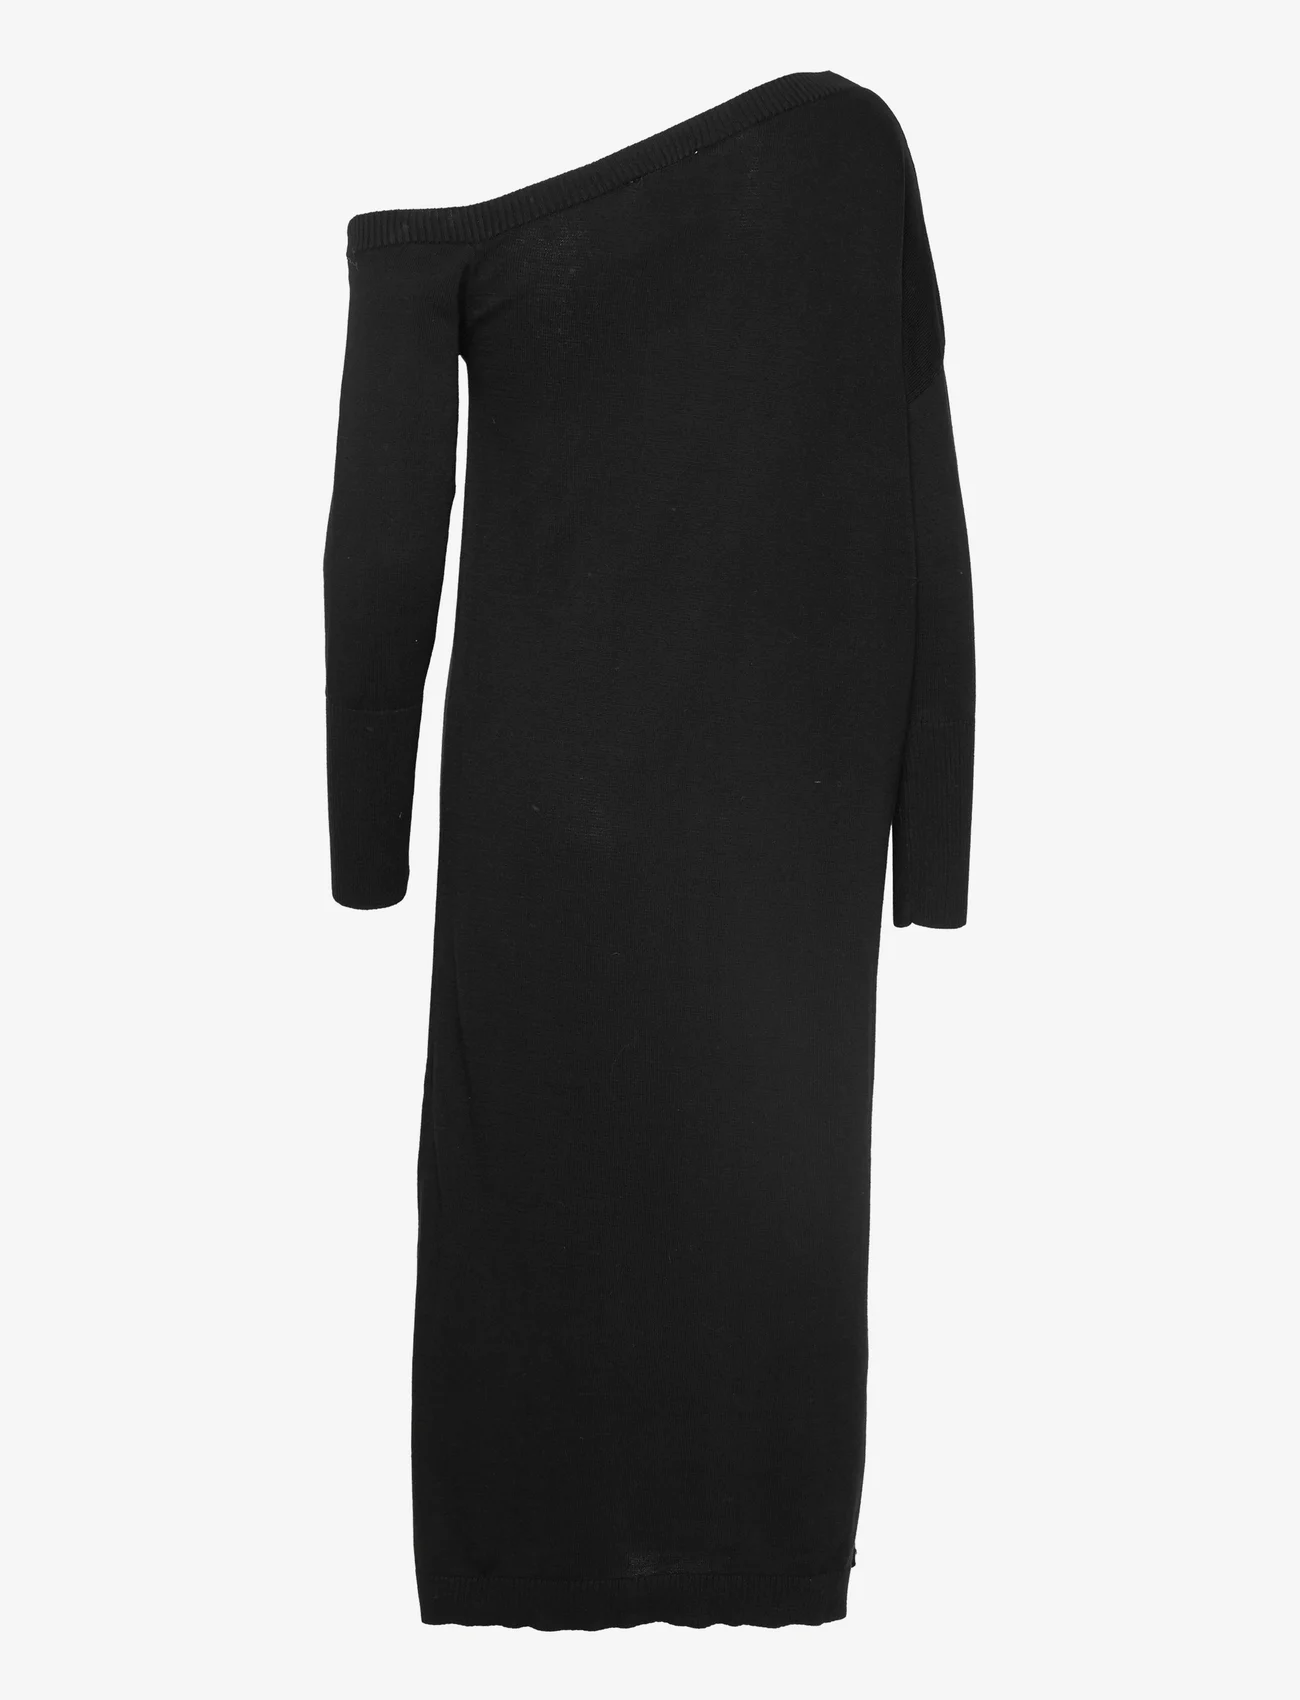 My Essential Wardrobe - LolaMW Cut Out Knit Dress - megztos suknelės - black - 1